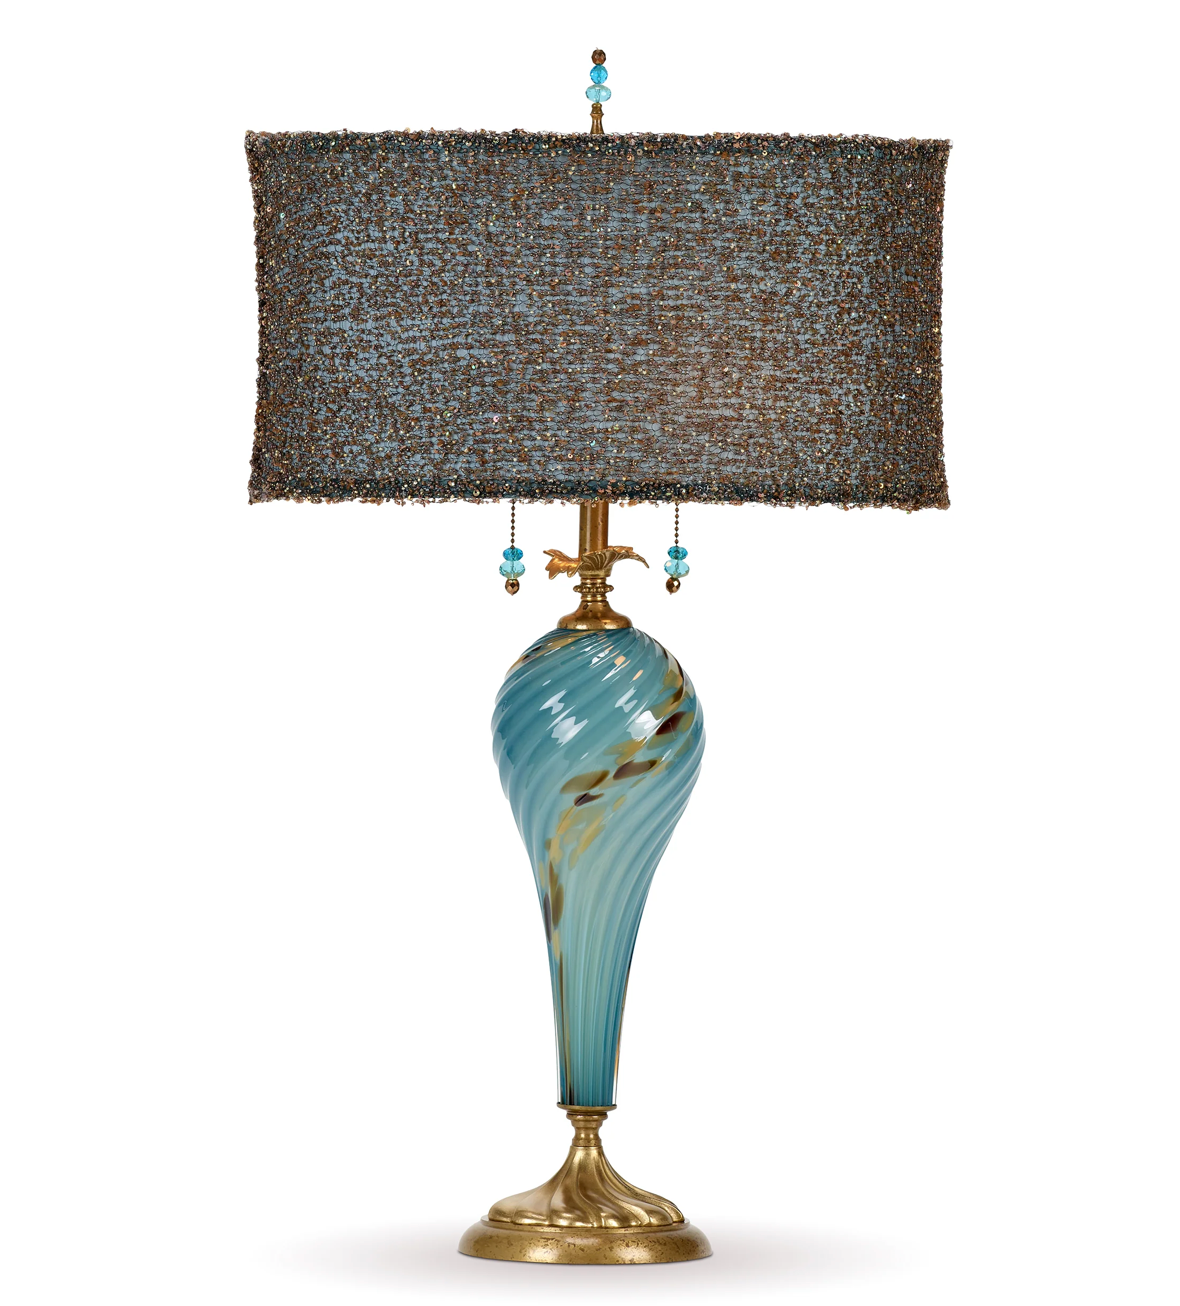 Kinzig Design "Renee" table lamp (to order)